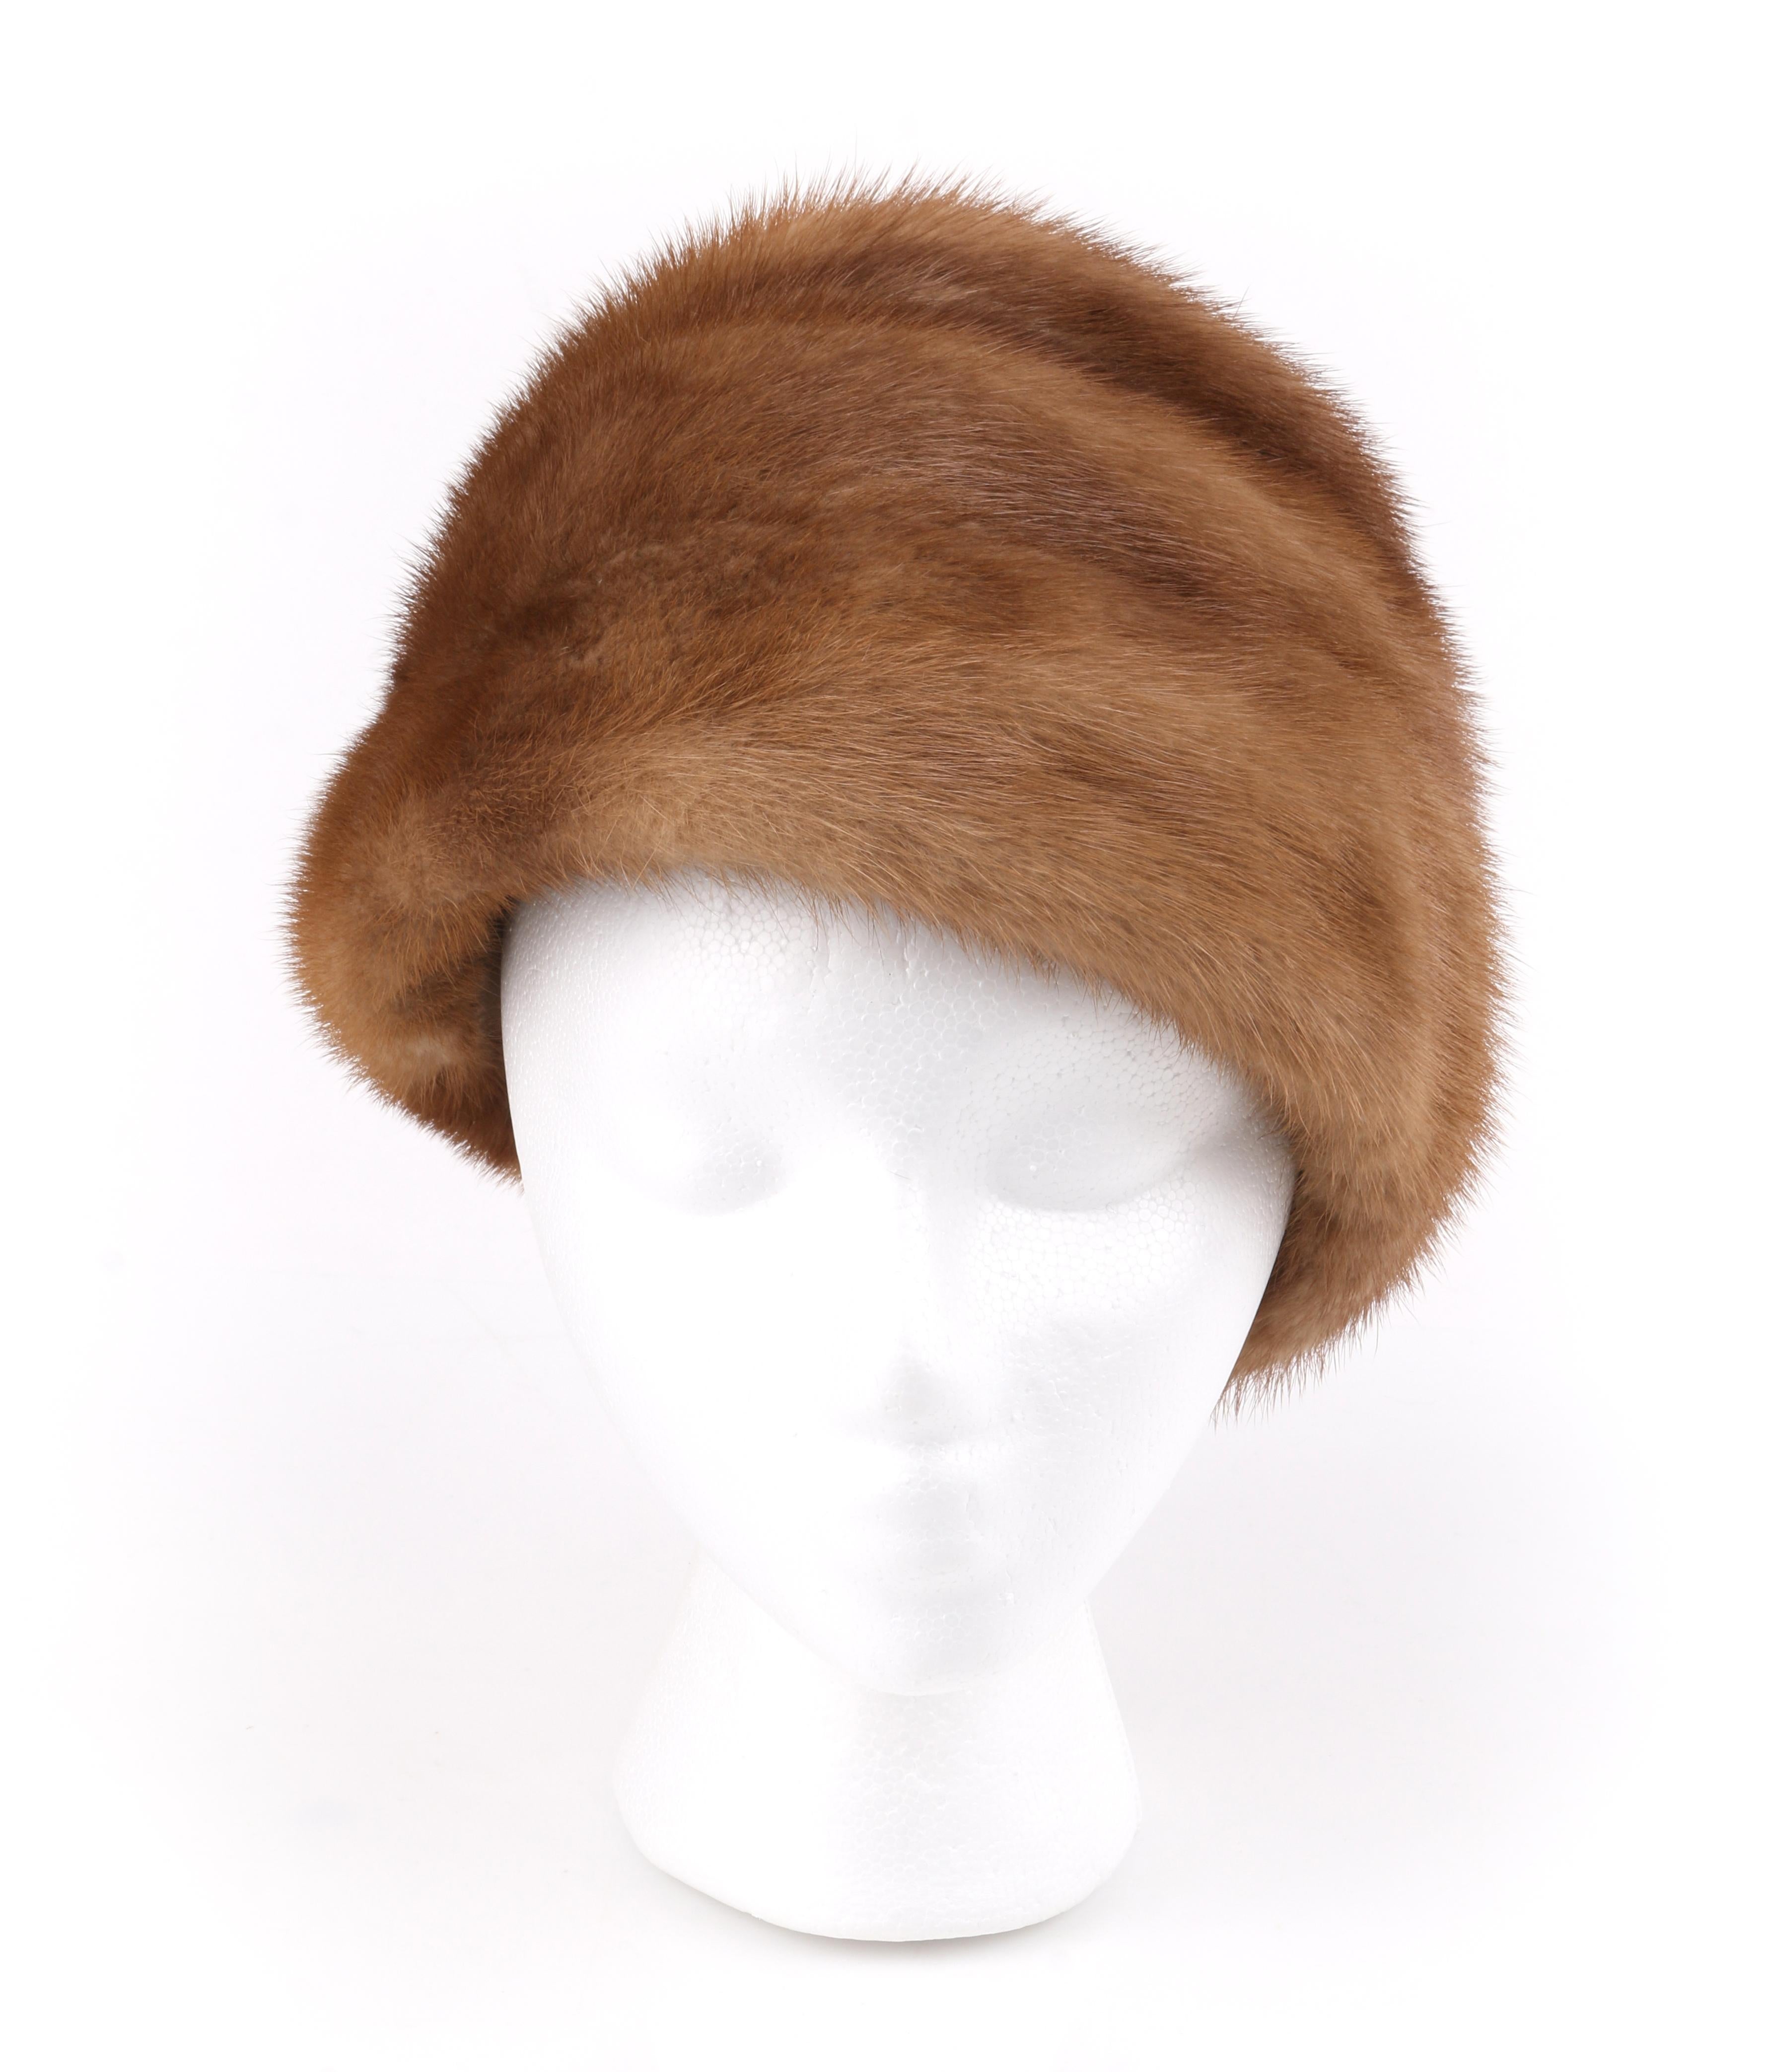 CHRISTIAN DIOR Chapeaux c.1960’s Marc Bohan Brown Mink Fur Tiered Cossack Hat
 
Circa: 1960’s
Label(s): Christian Dior / Chapeaux / Paris - New York
Designer: Marc Bohan
Style: Cossack Hat
Color(s): Brown
Lined: Yes 
Unmarked Fabric Content: Mink